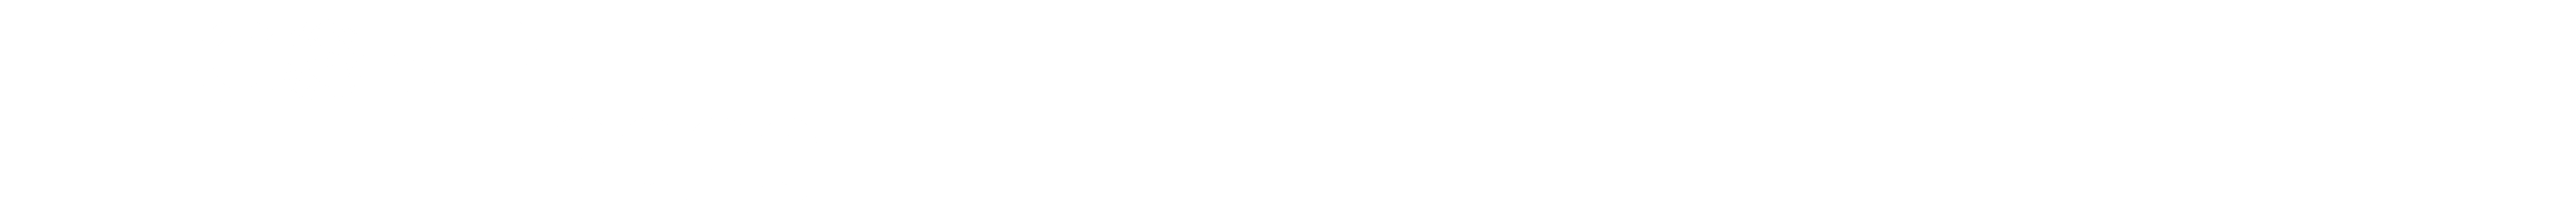 COMPETE 2020 logo